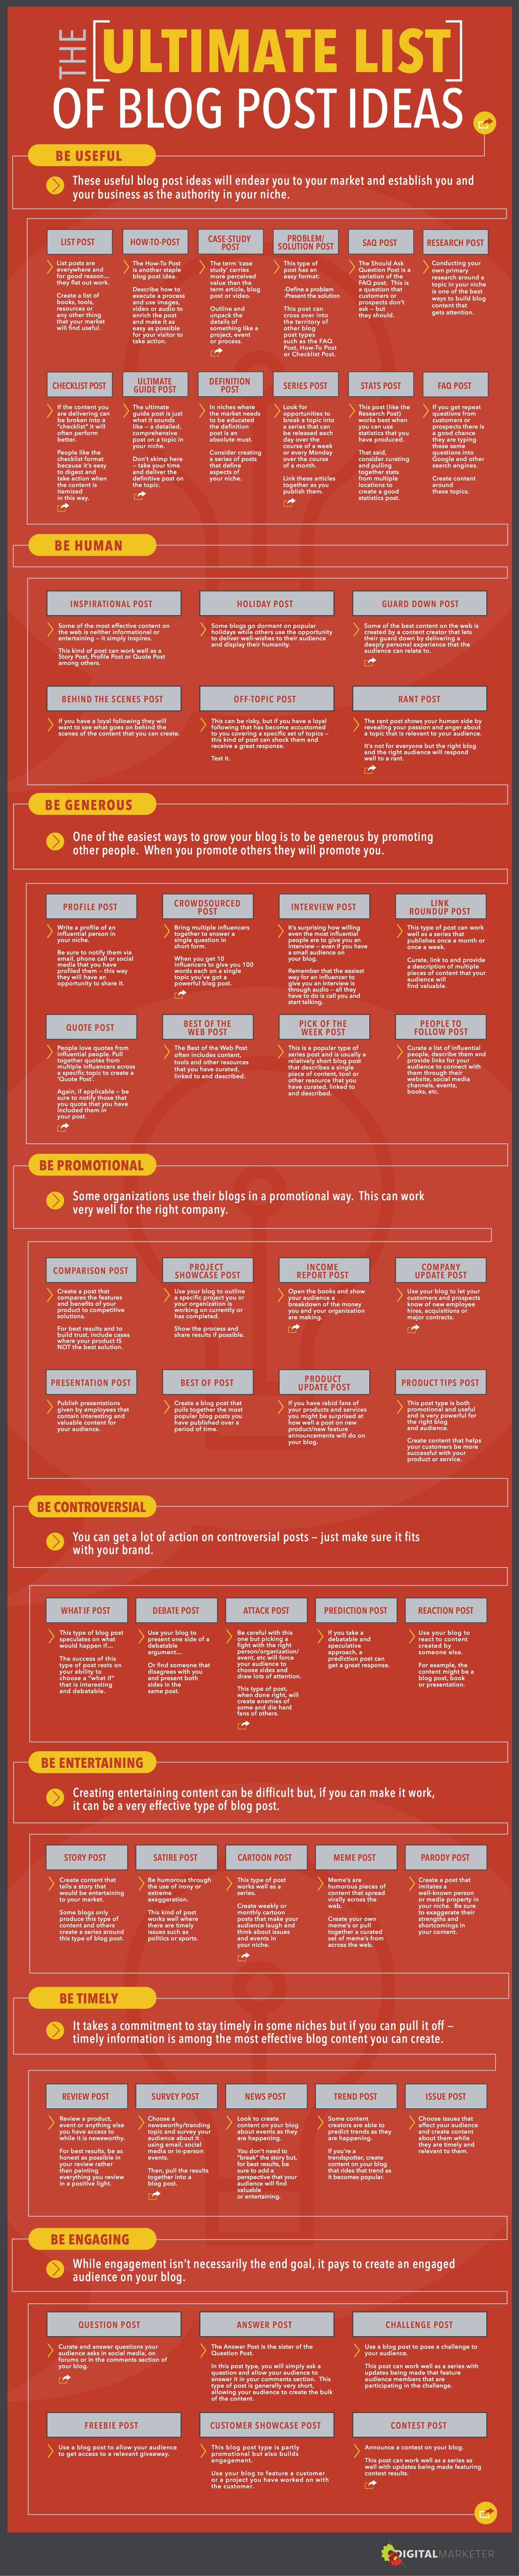 blogging-ideas-infographic